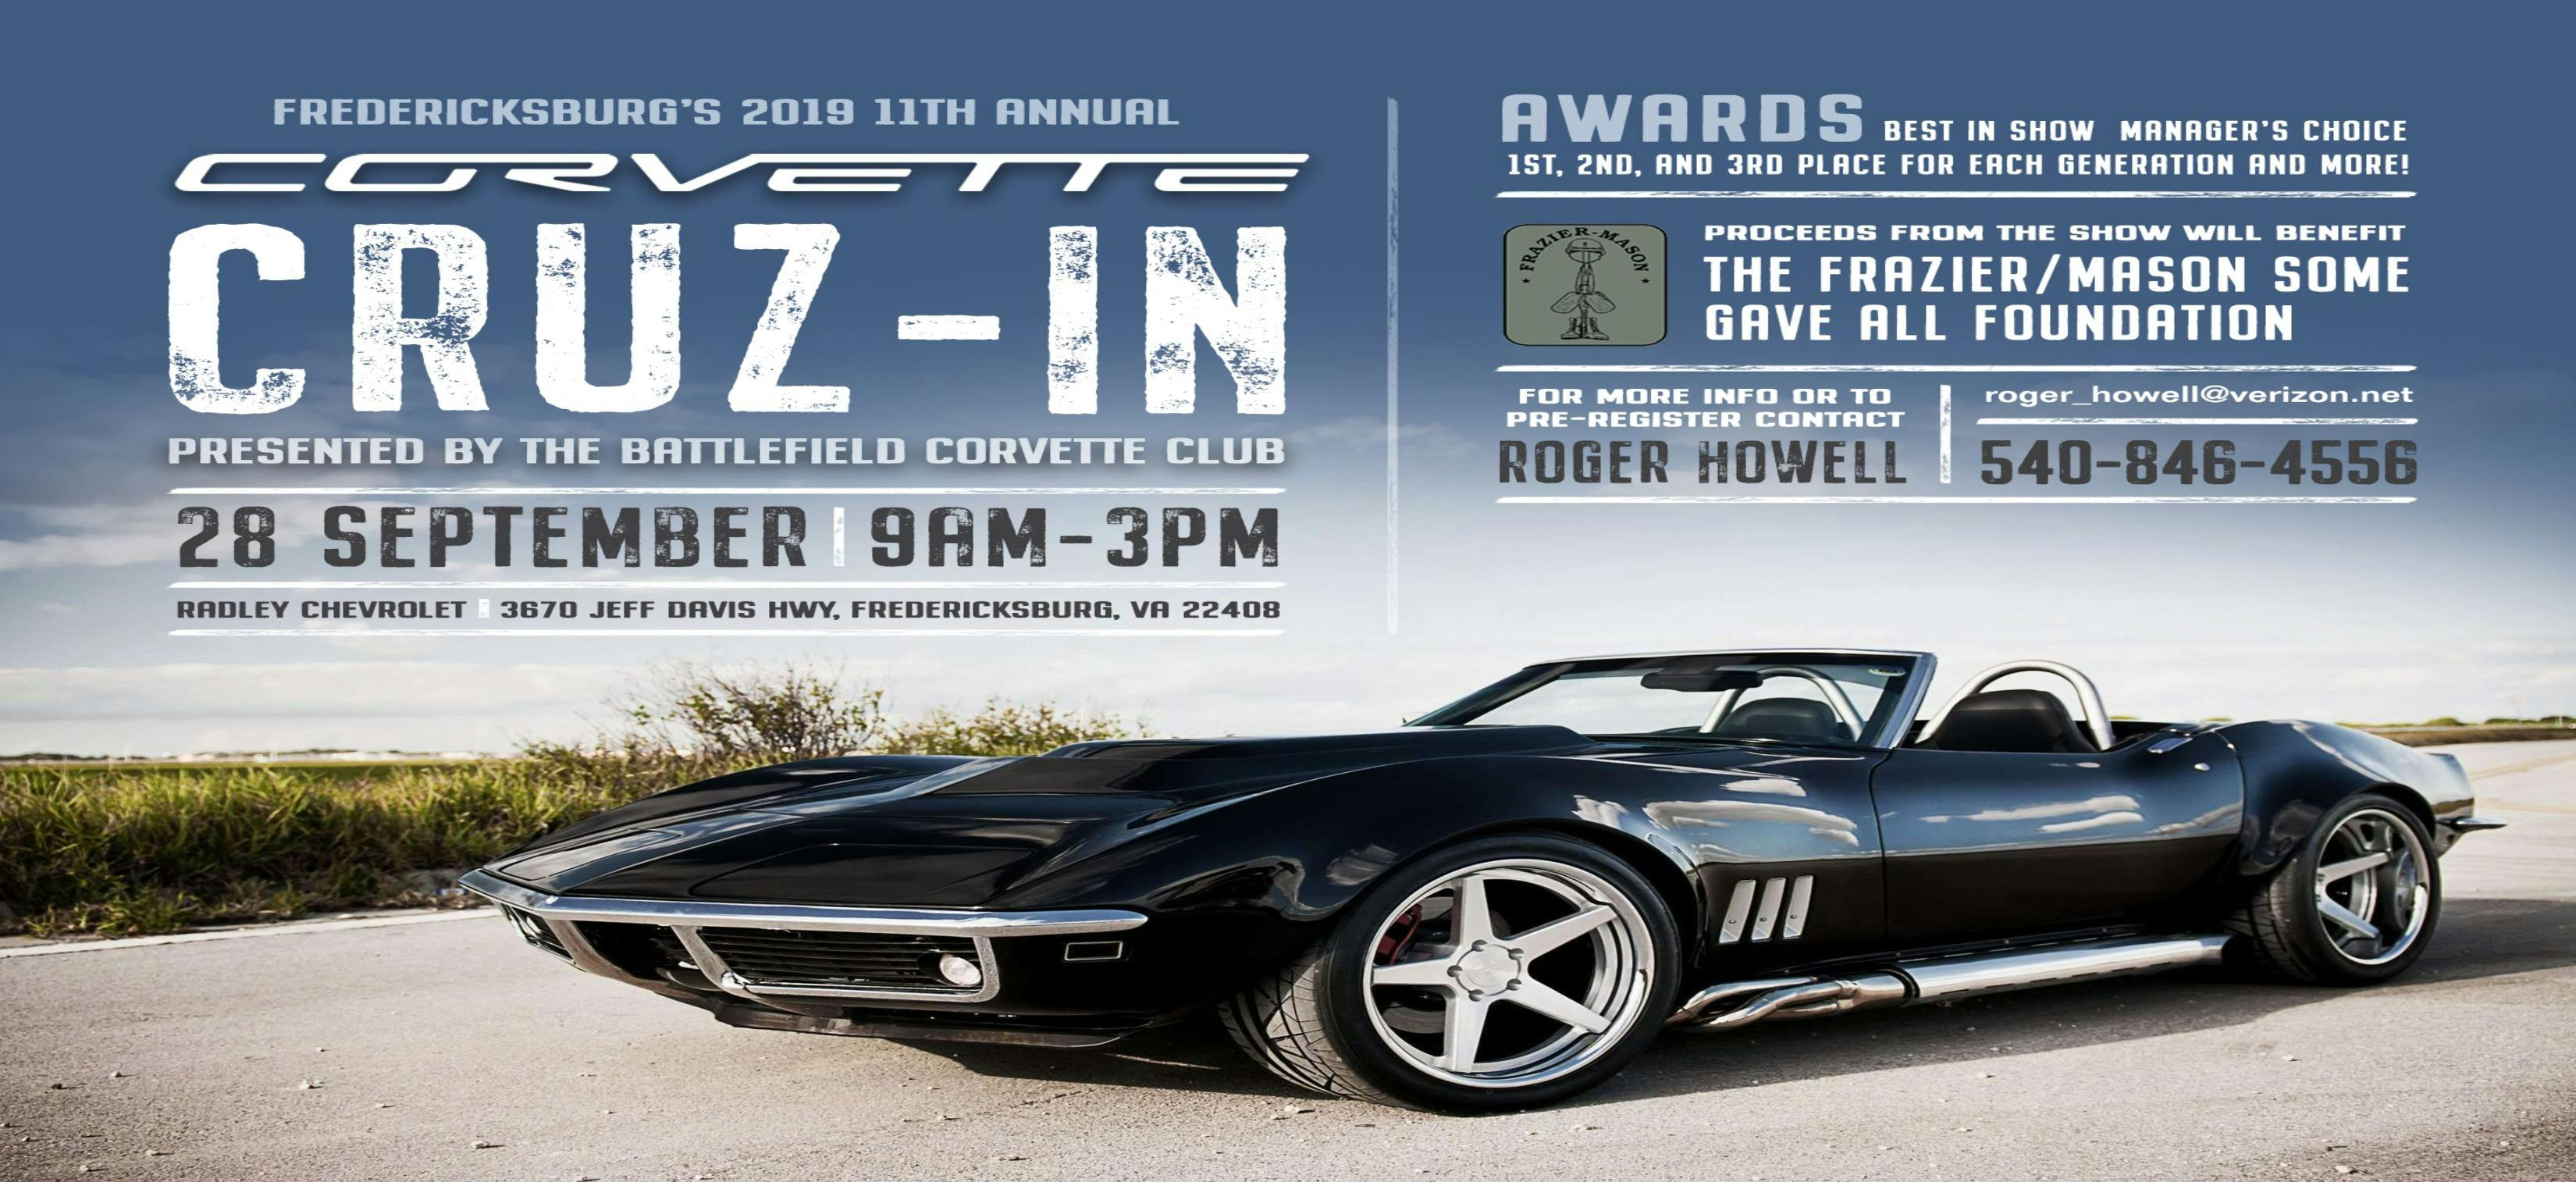 The 11th Annual Battlefield Corvette Club All Corvette Cruz-In Car Show